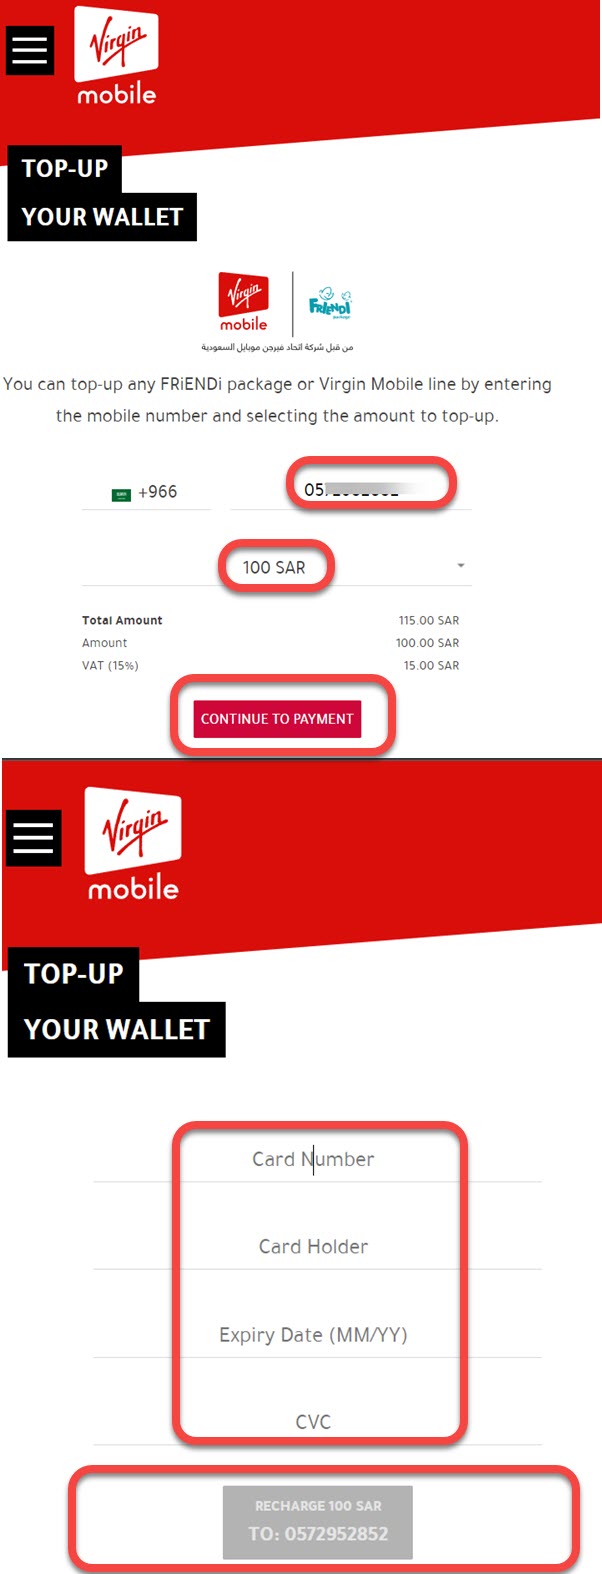 Recharge Virgin Mobile Online in Saudi Arabia